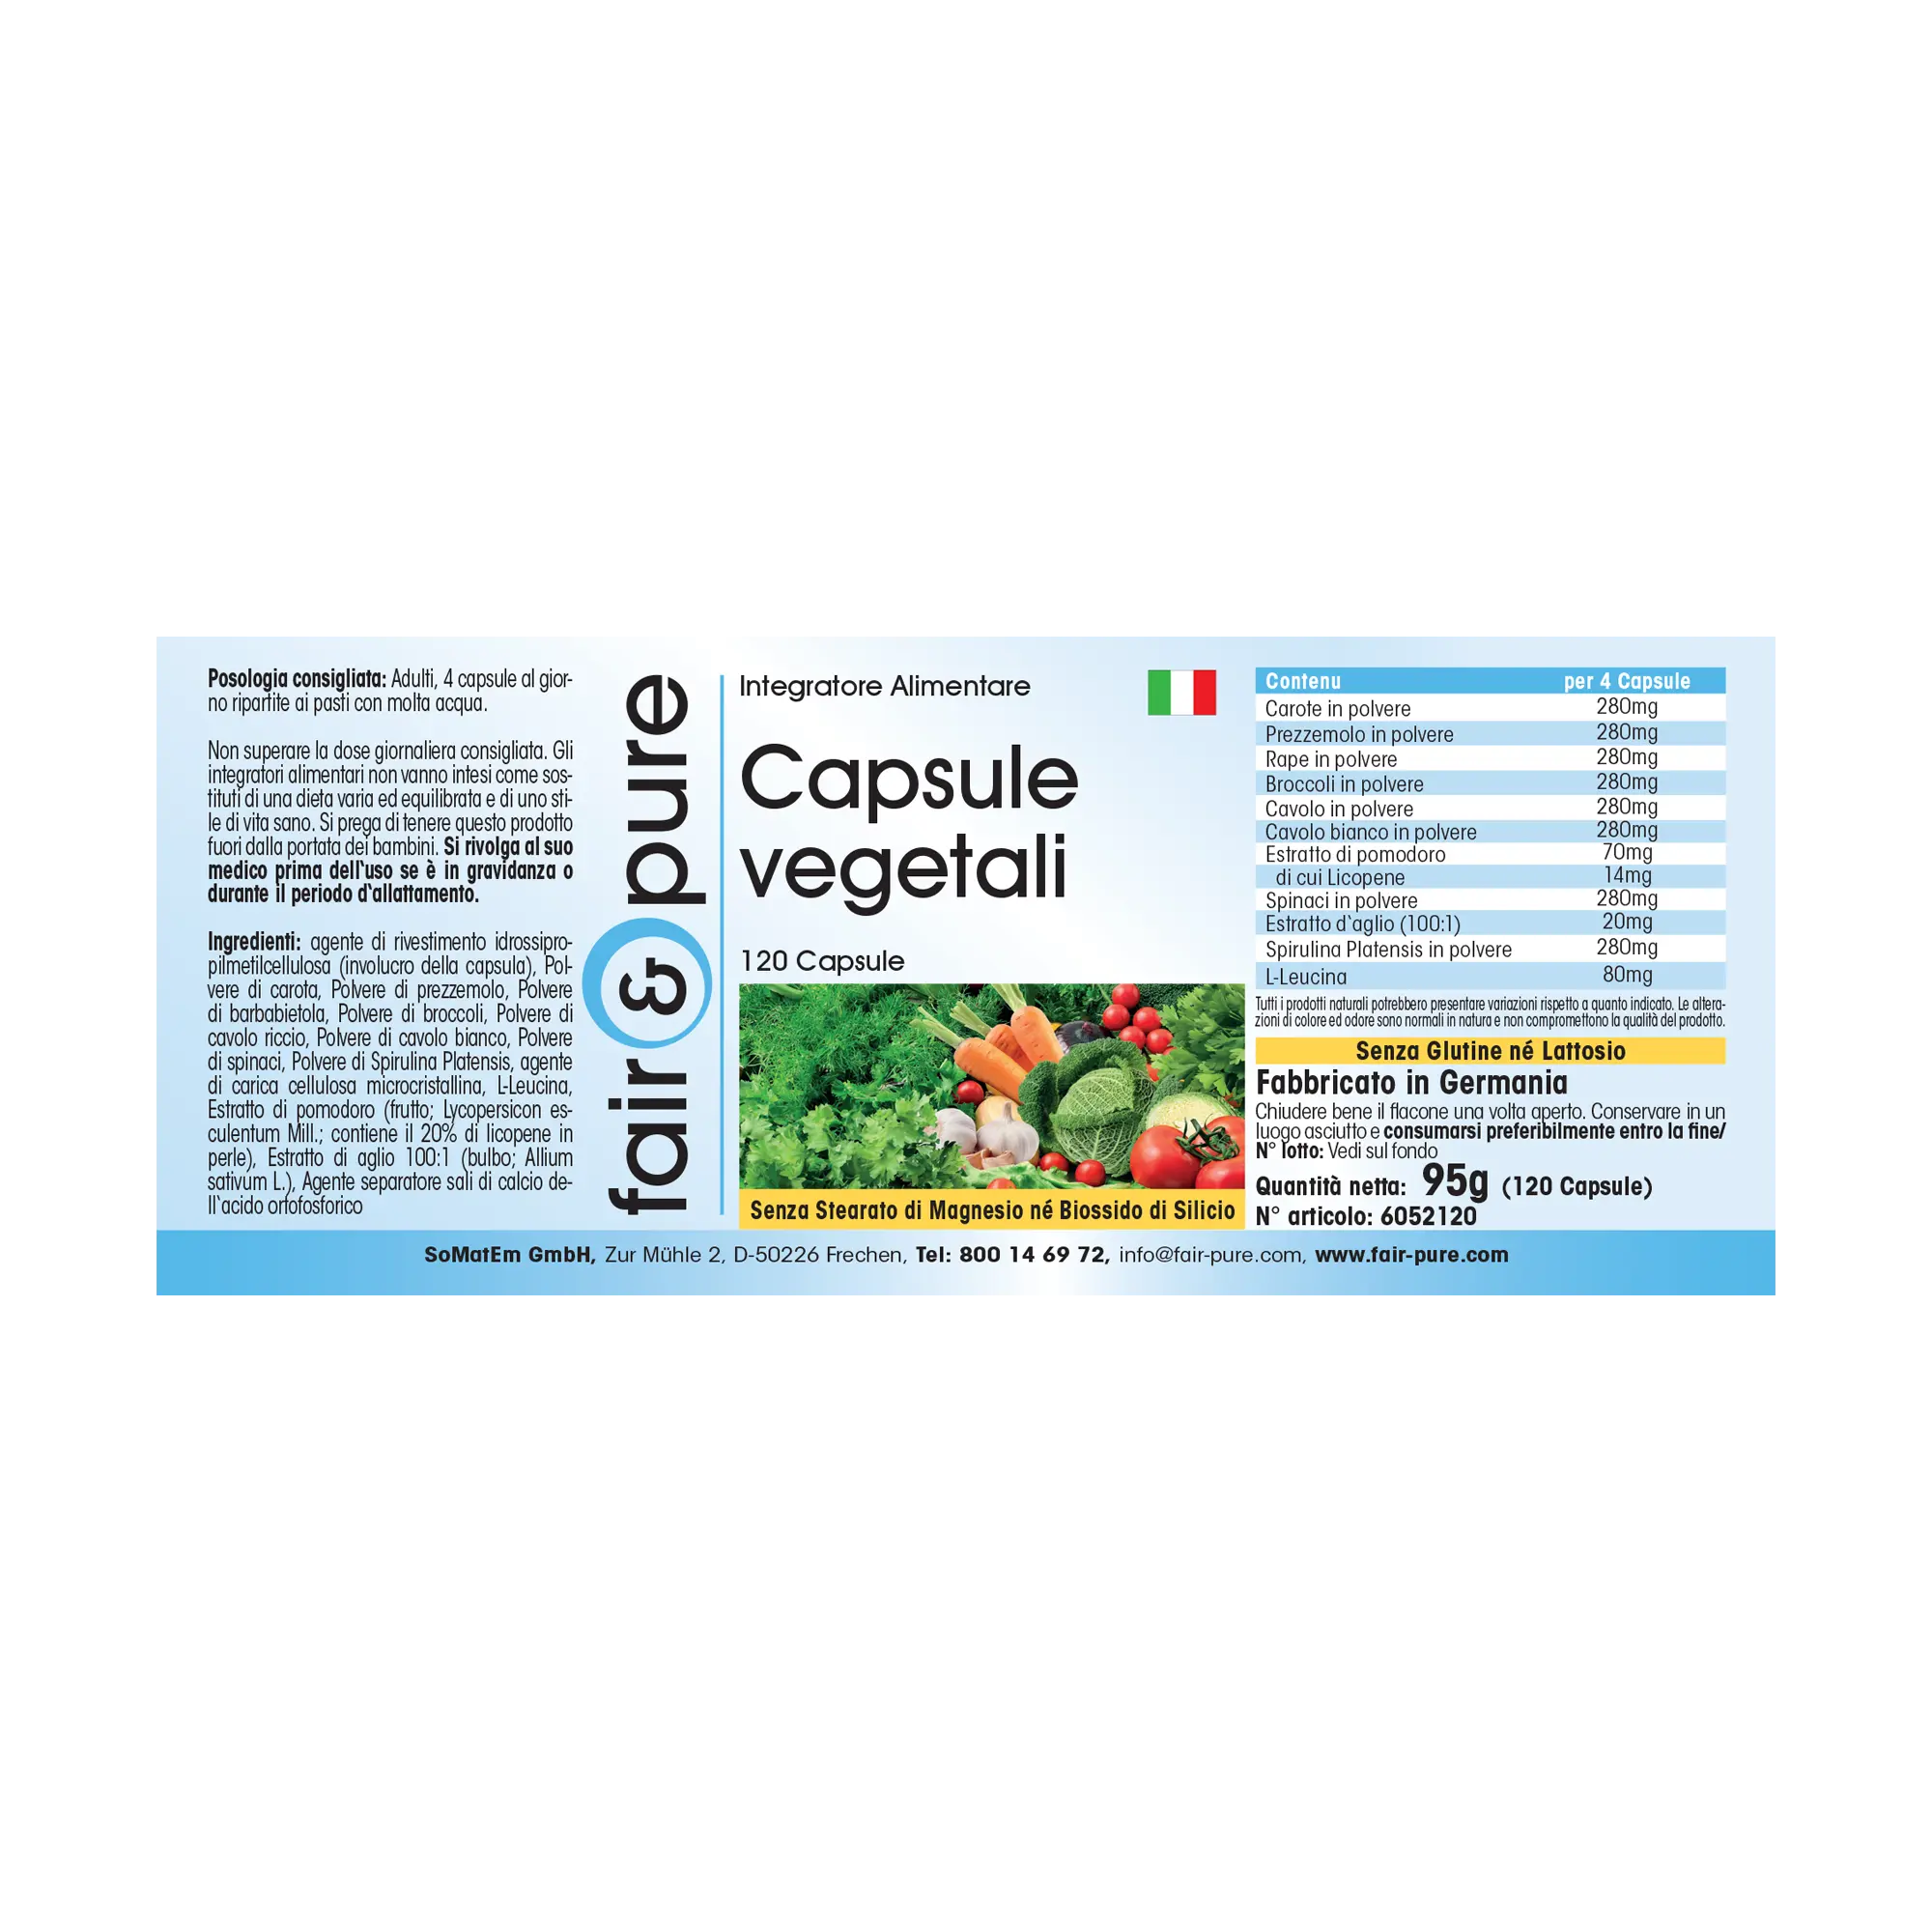 Vegetable capsules